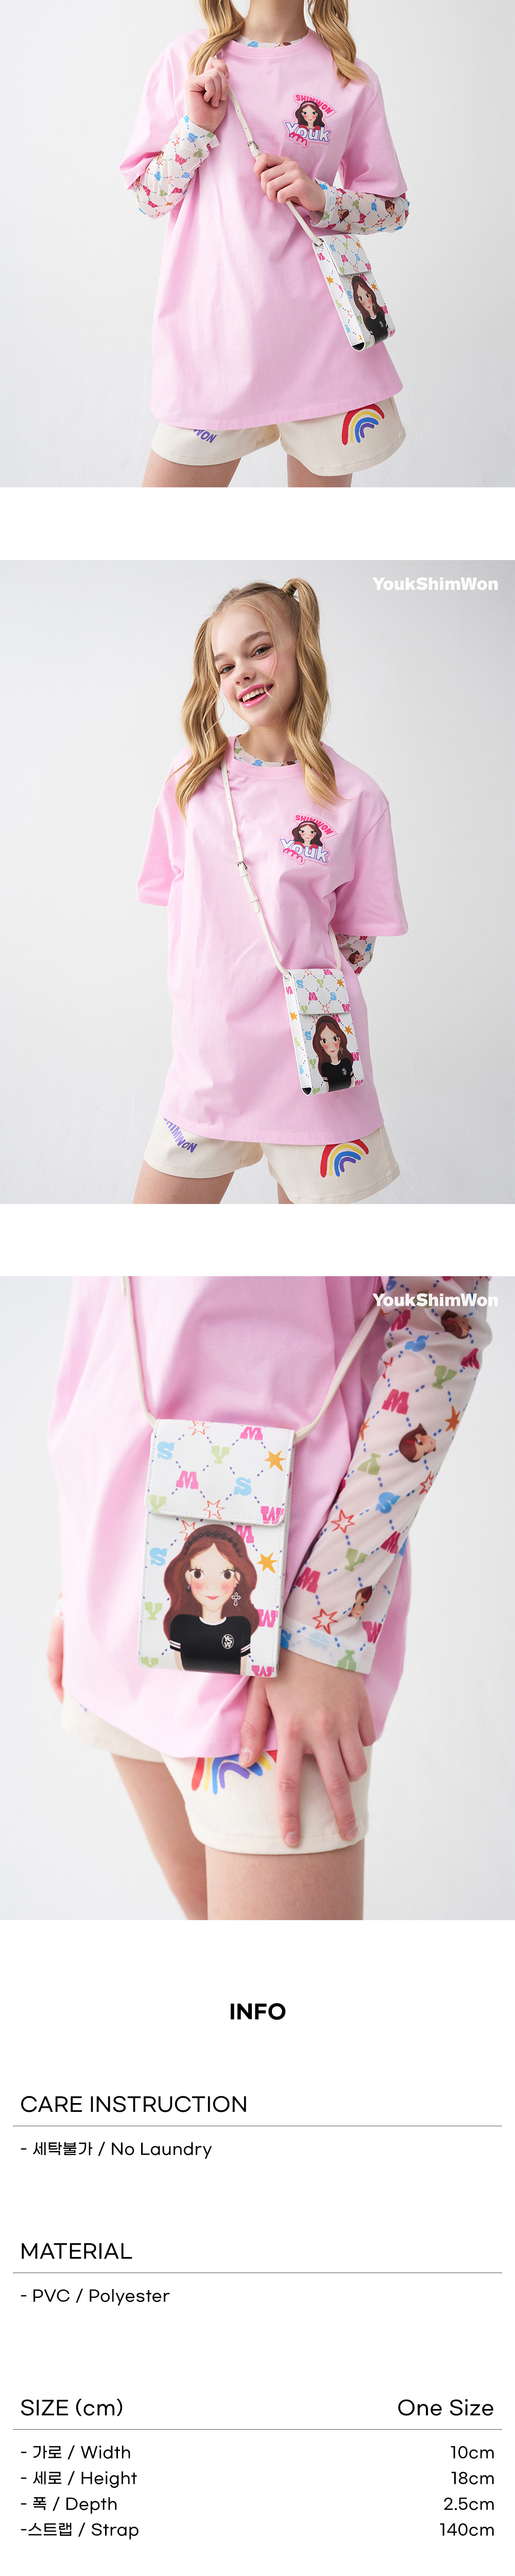 bag baby pink color image-S1L1